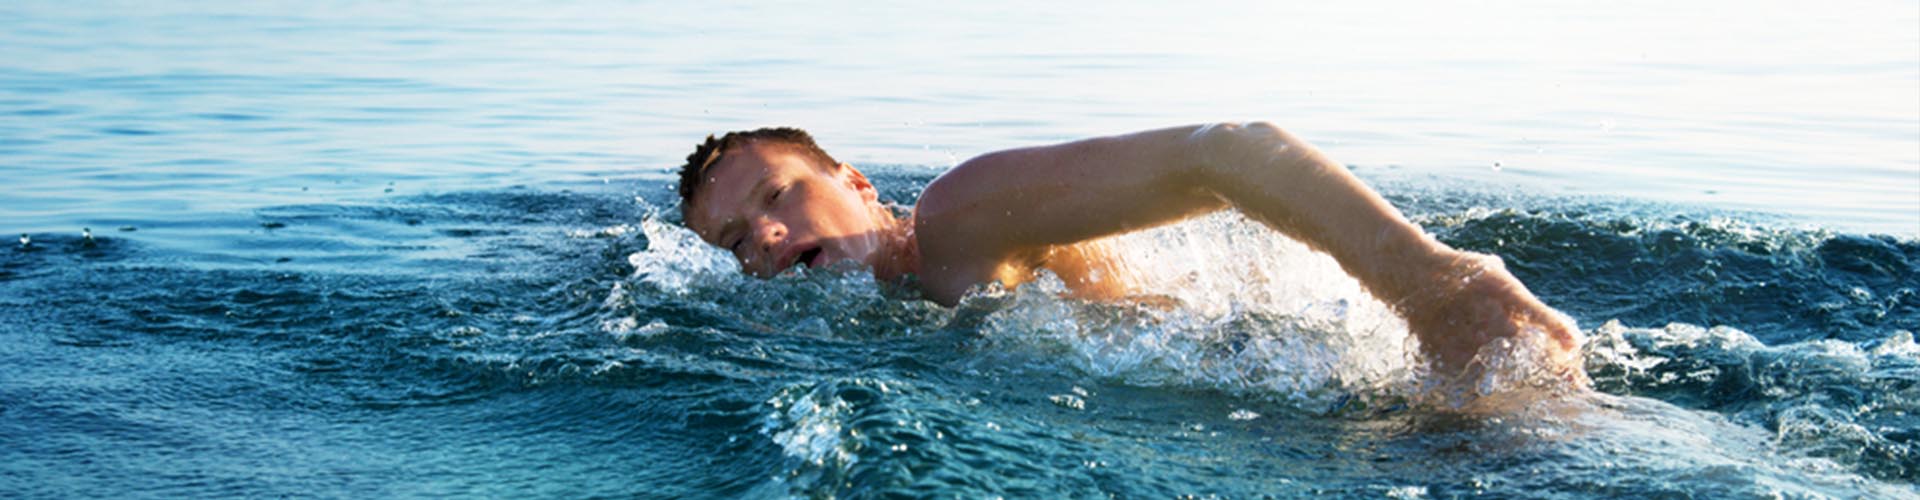 A man wild swimming